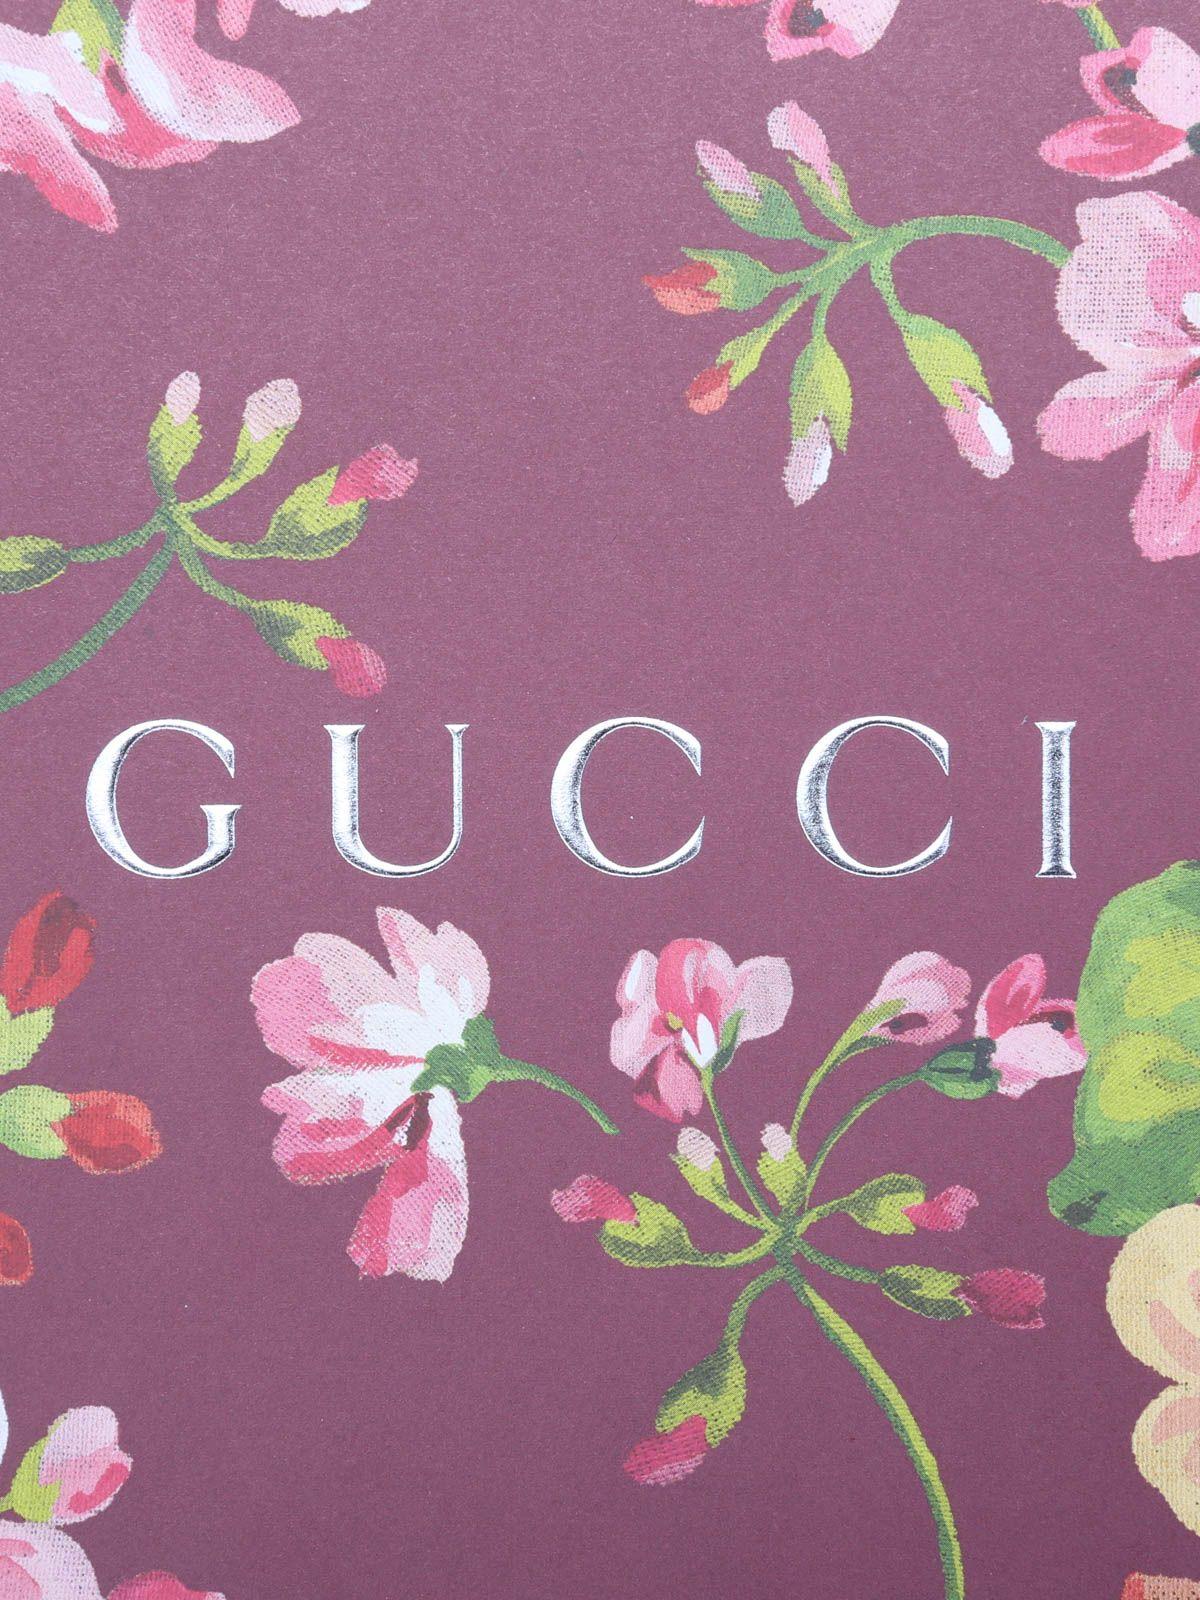 Best Gucci iPhone HD Wallpapers  iLikeWallpaper